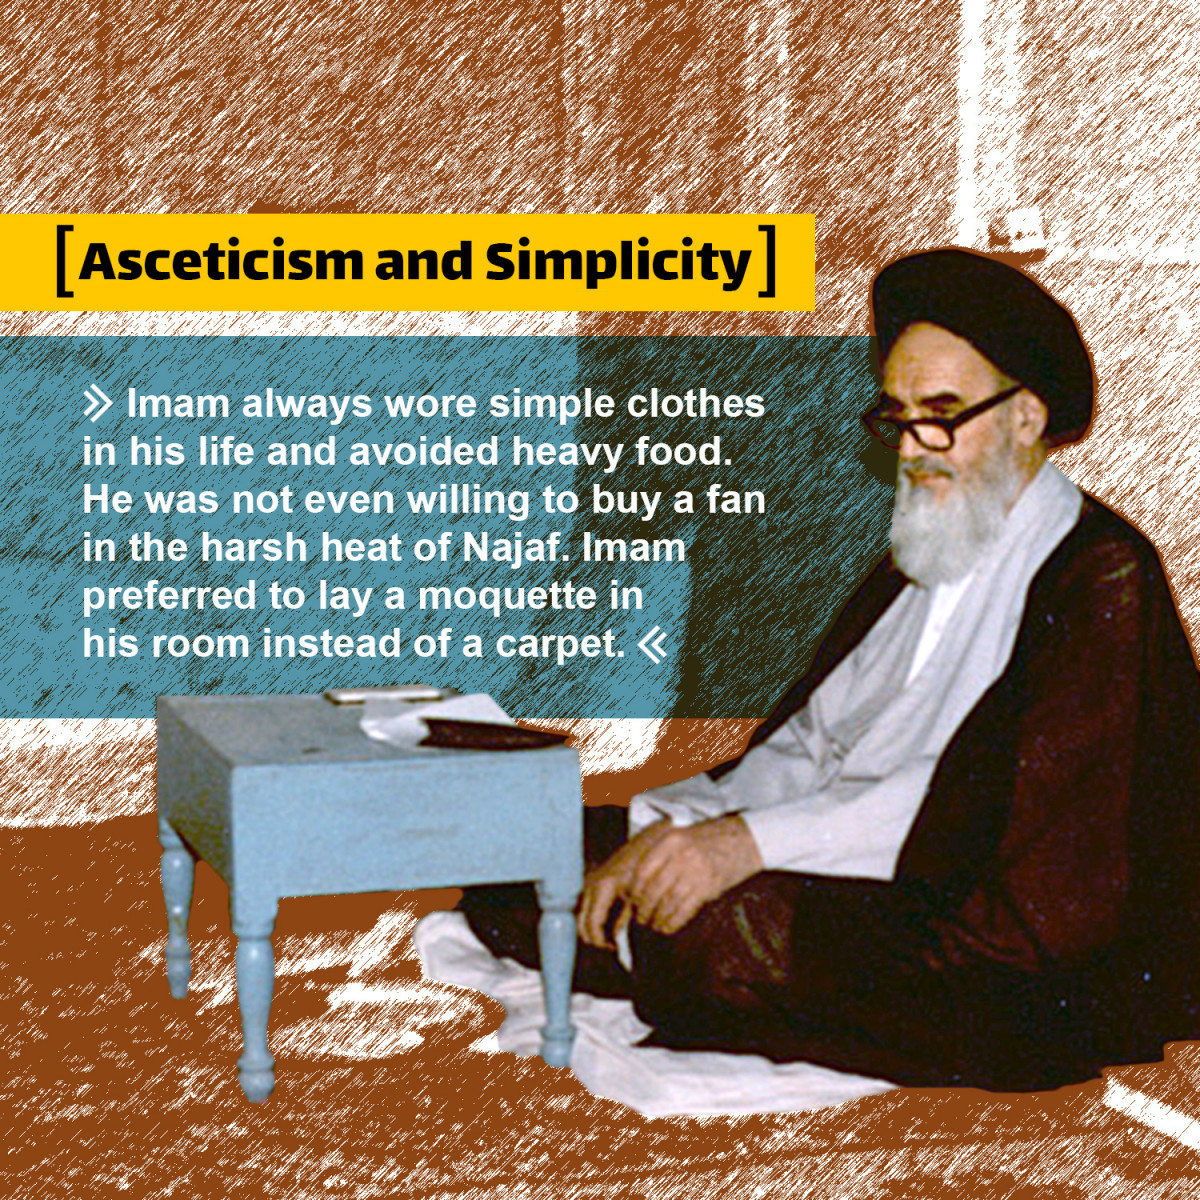 Imam khomeini; asceticism and simplicity